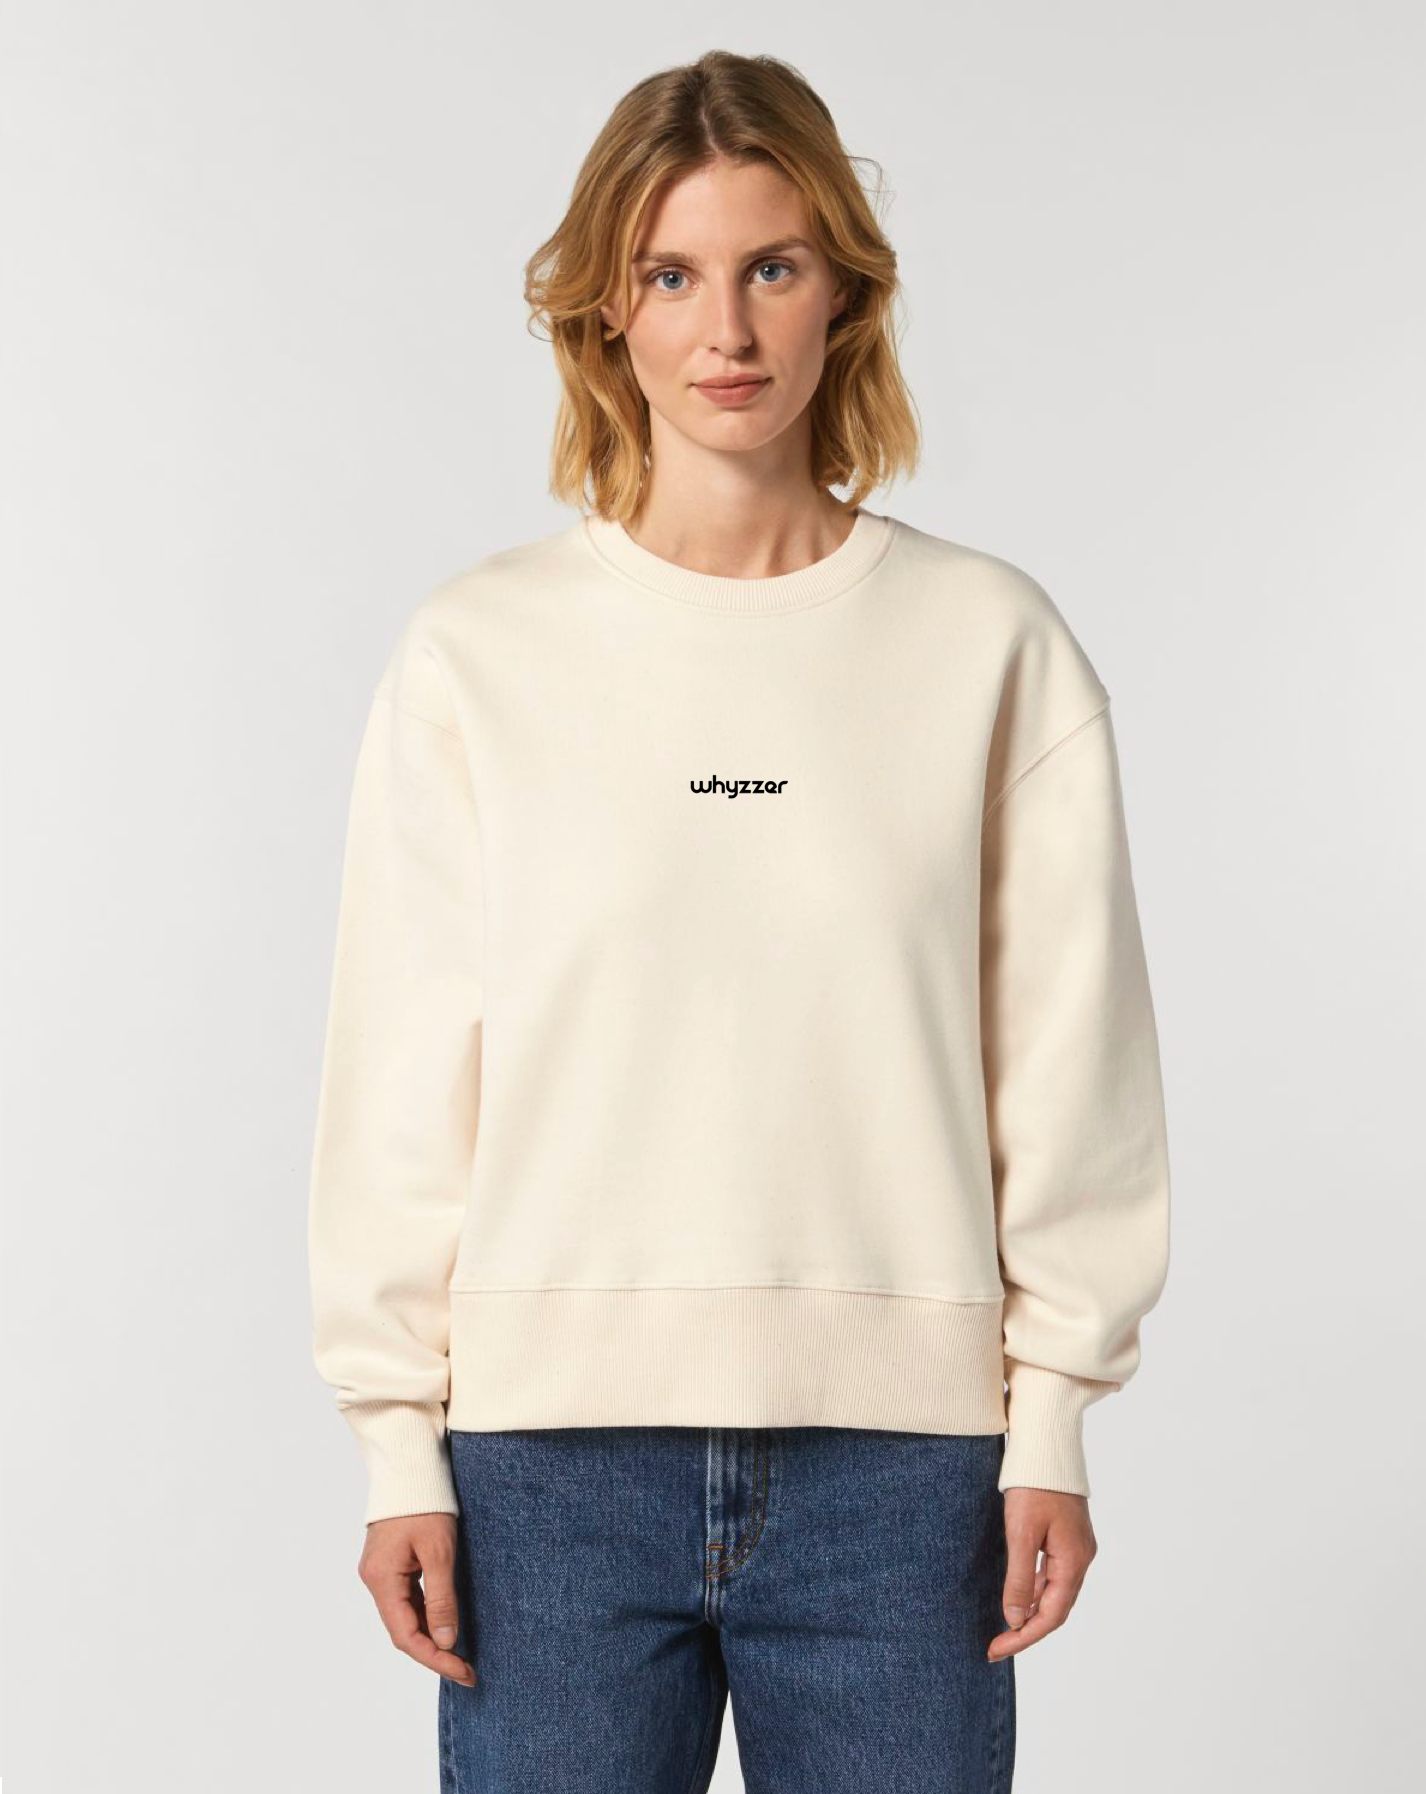 Whyzzer - Unisex Sweater